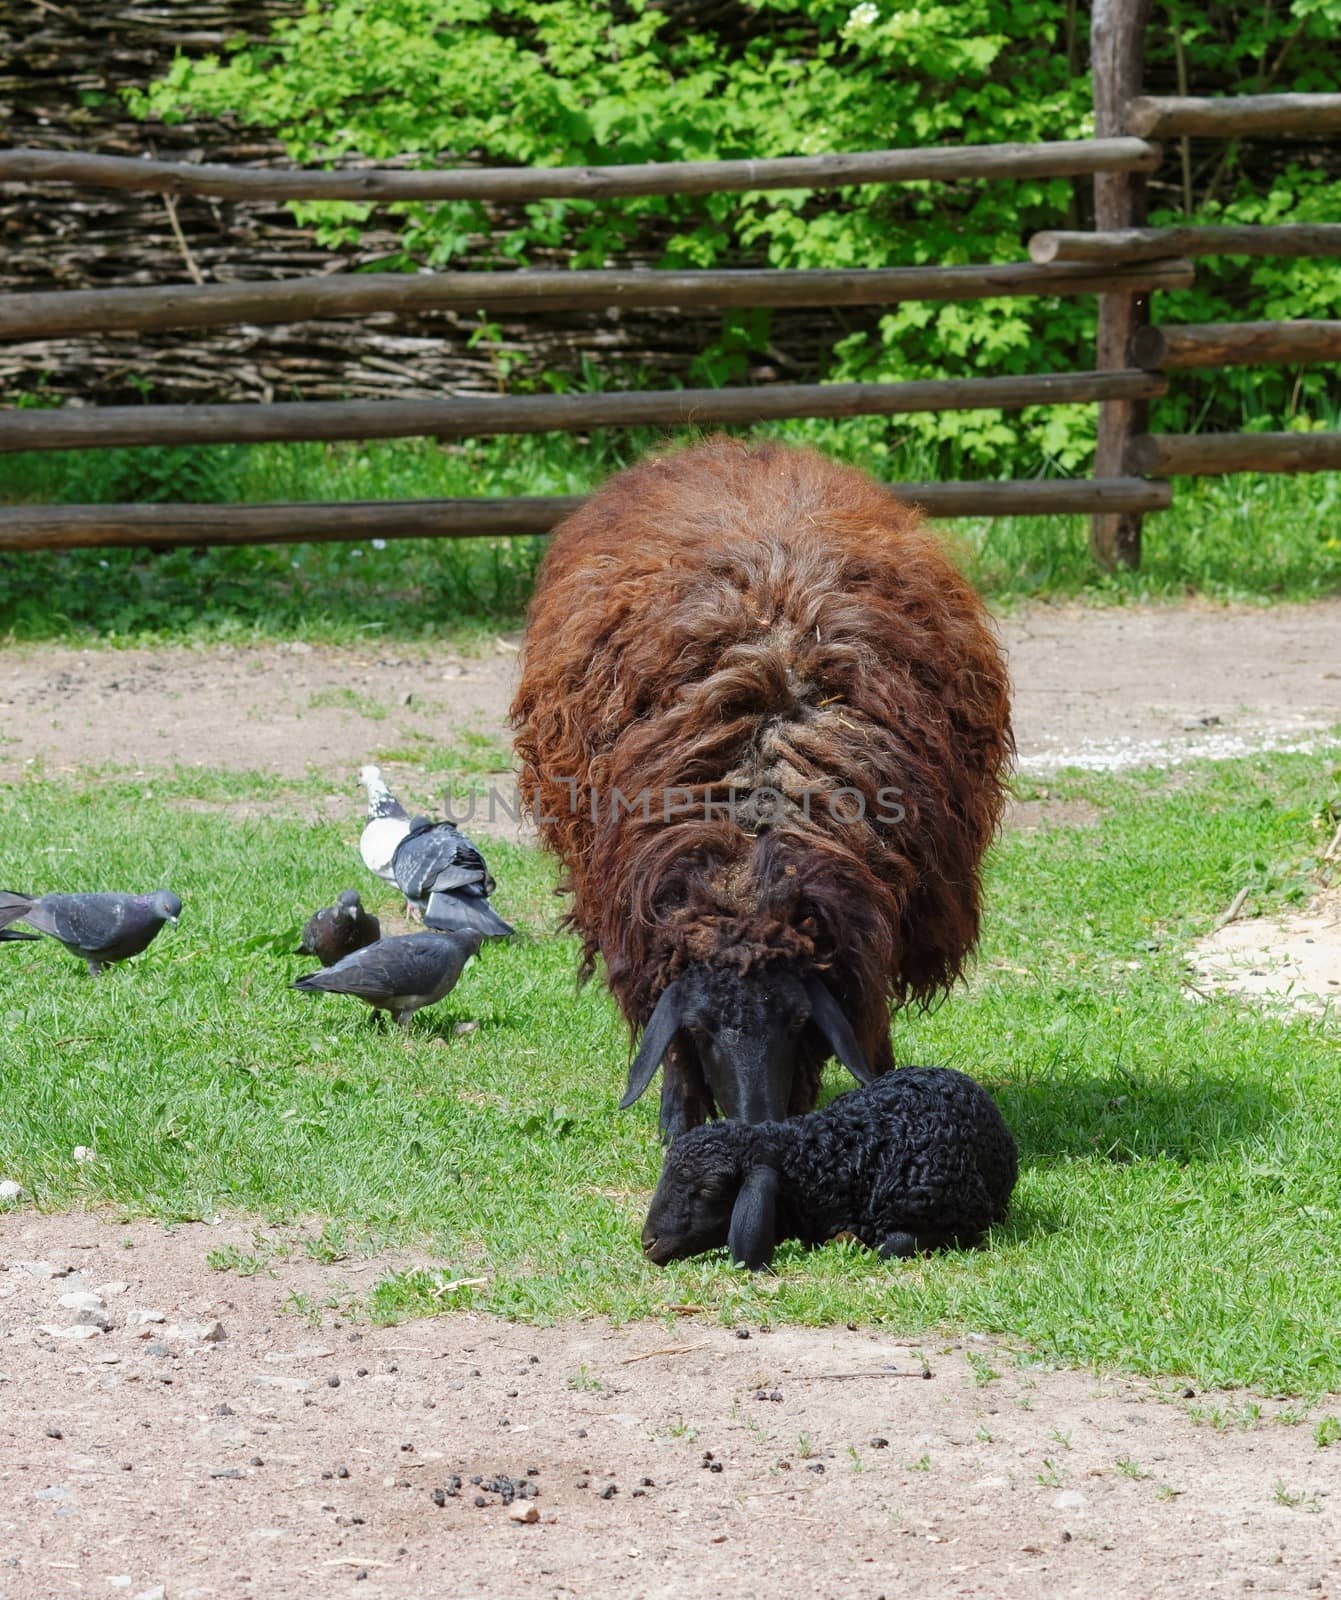 Brown sheep with a black lamb in a farmyard